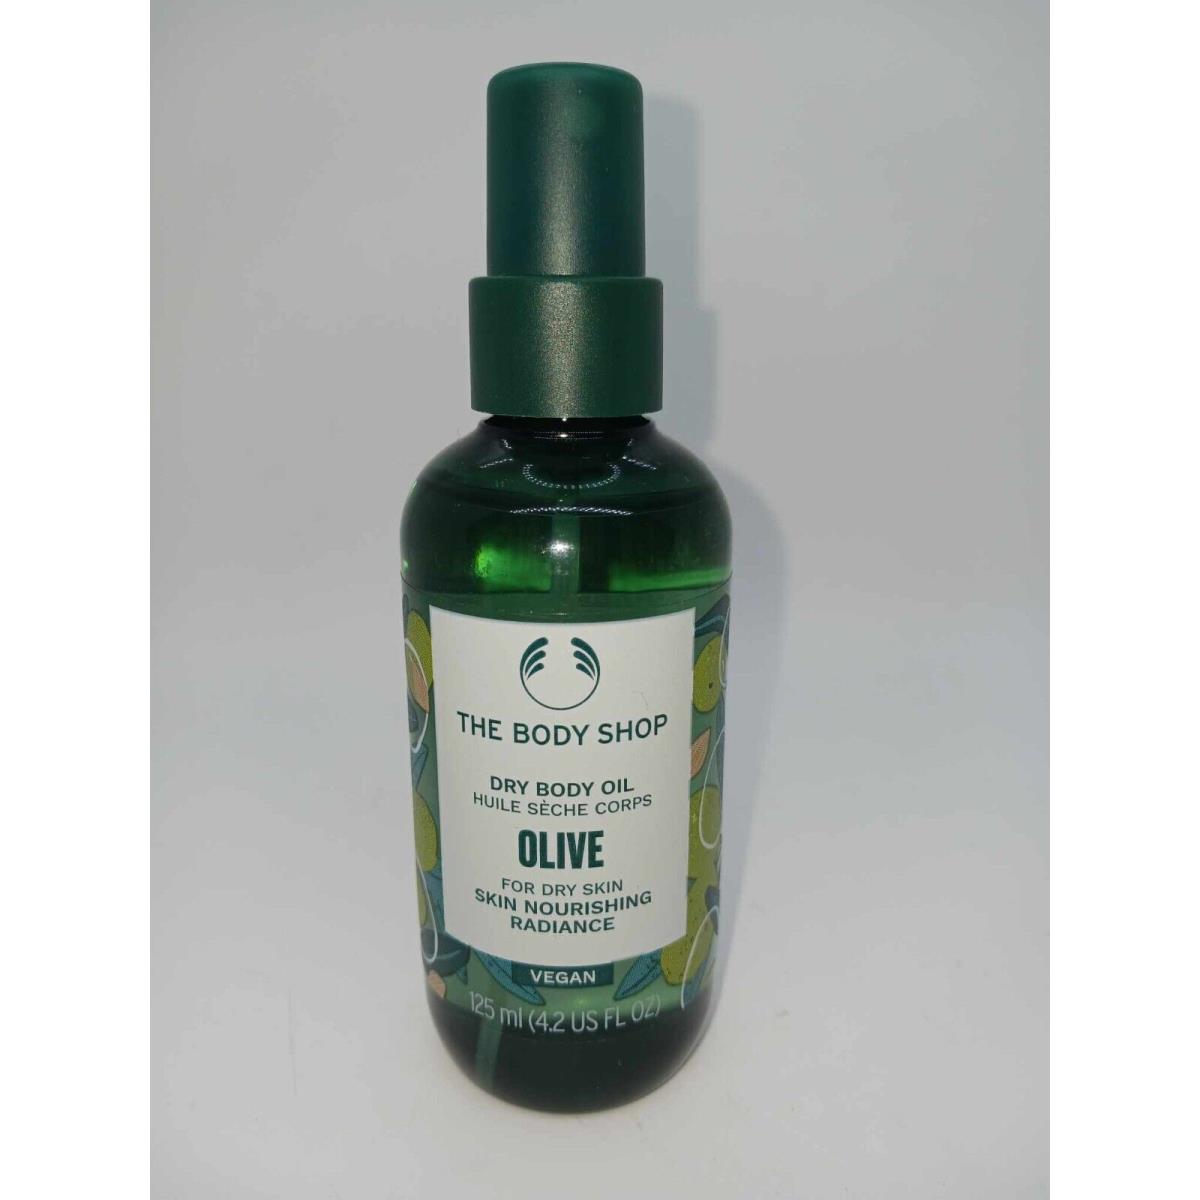 The Body Shop Dry Body Oil in Olive